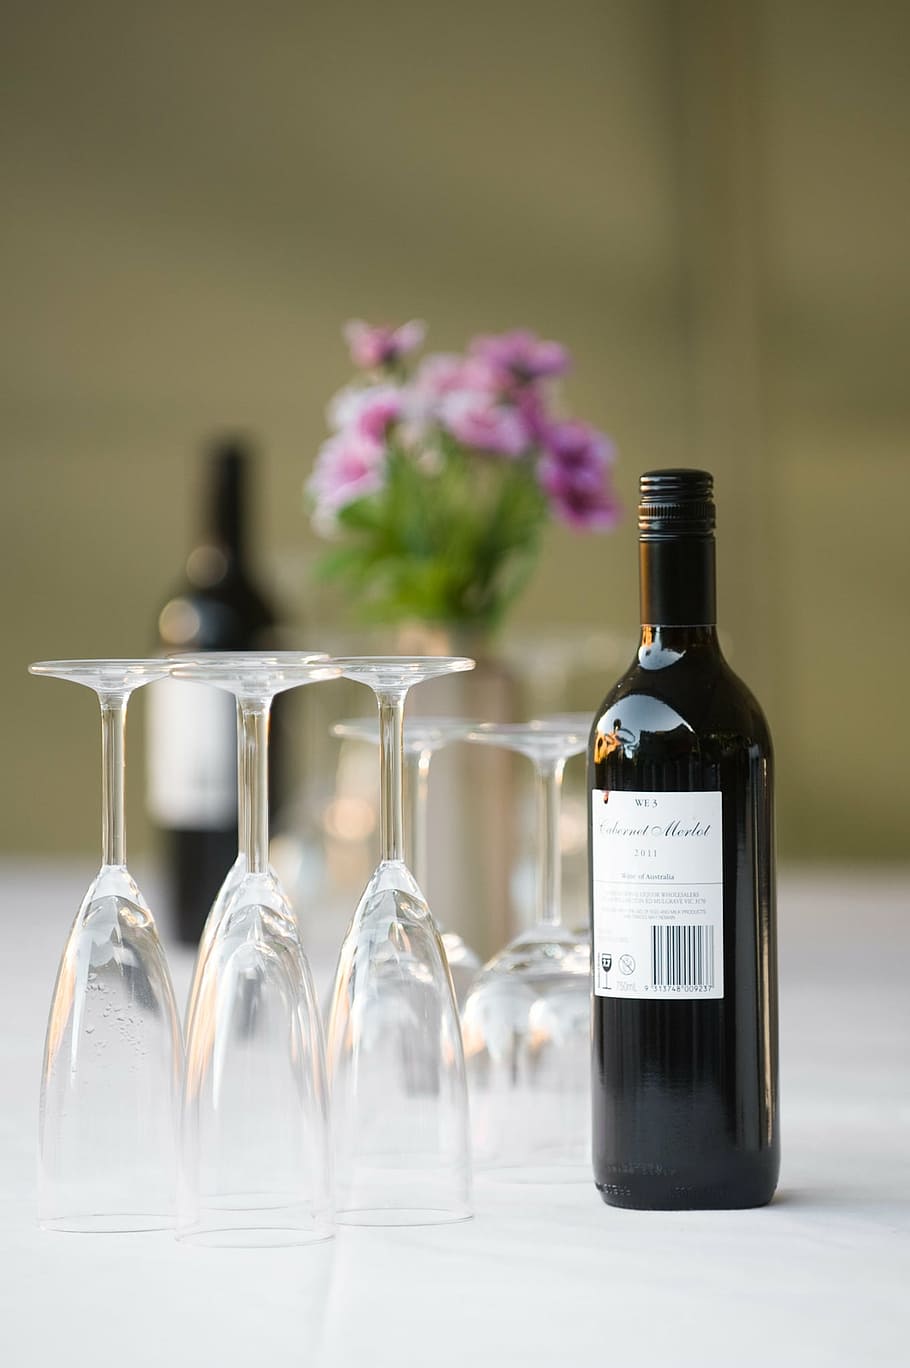 selective, focus photograph, wine bottle, glass, white, surface, wine, dining, restaurant, dinner